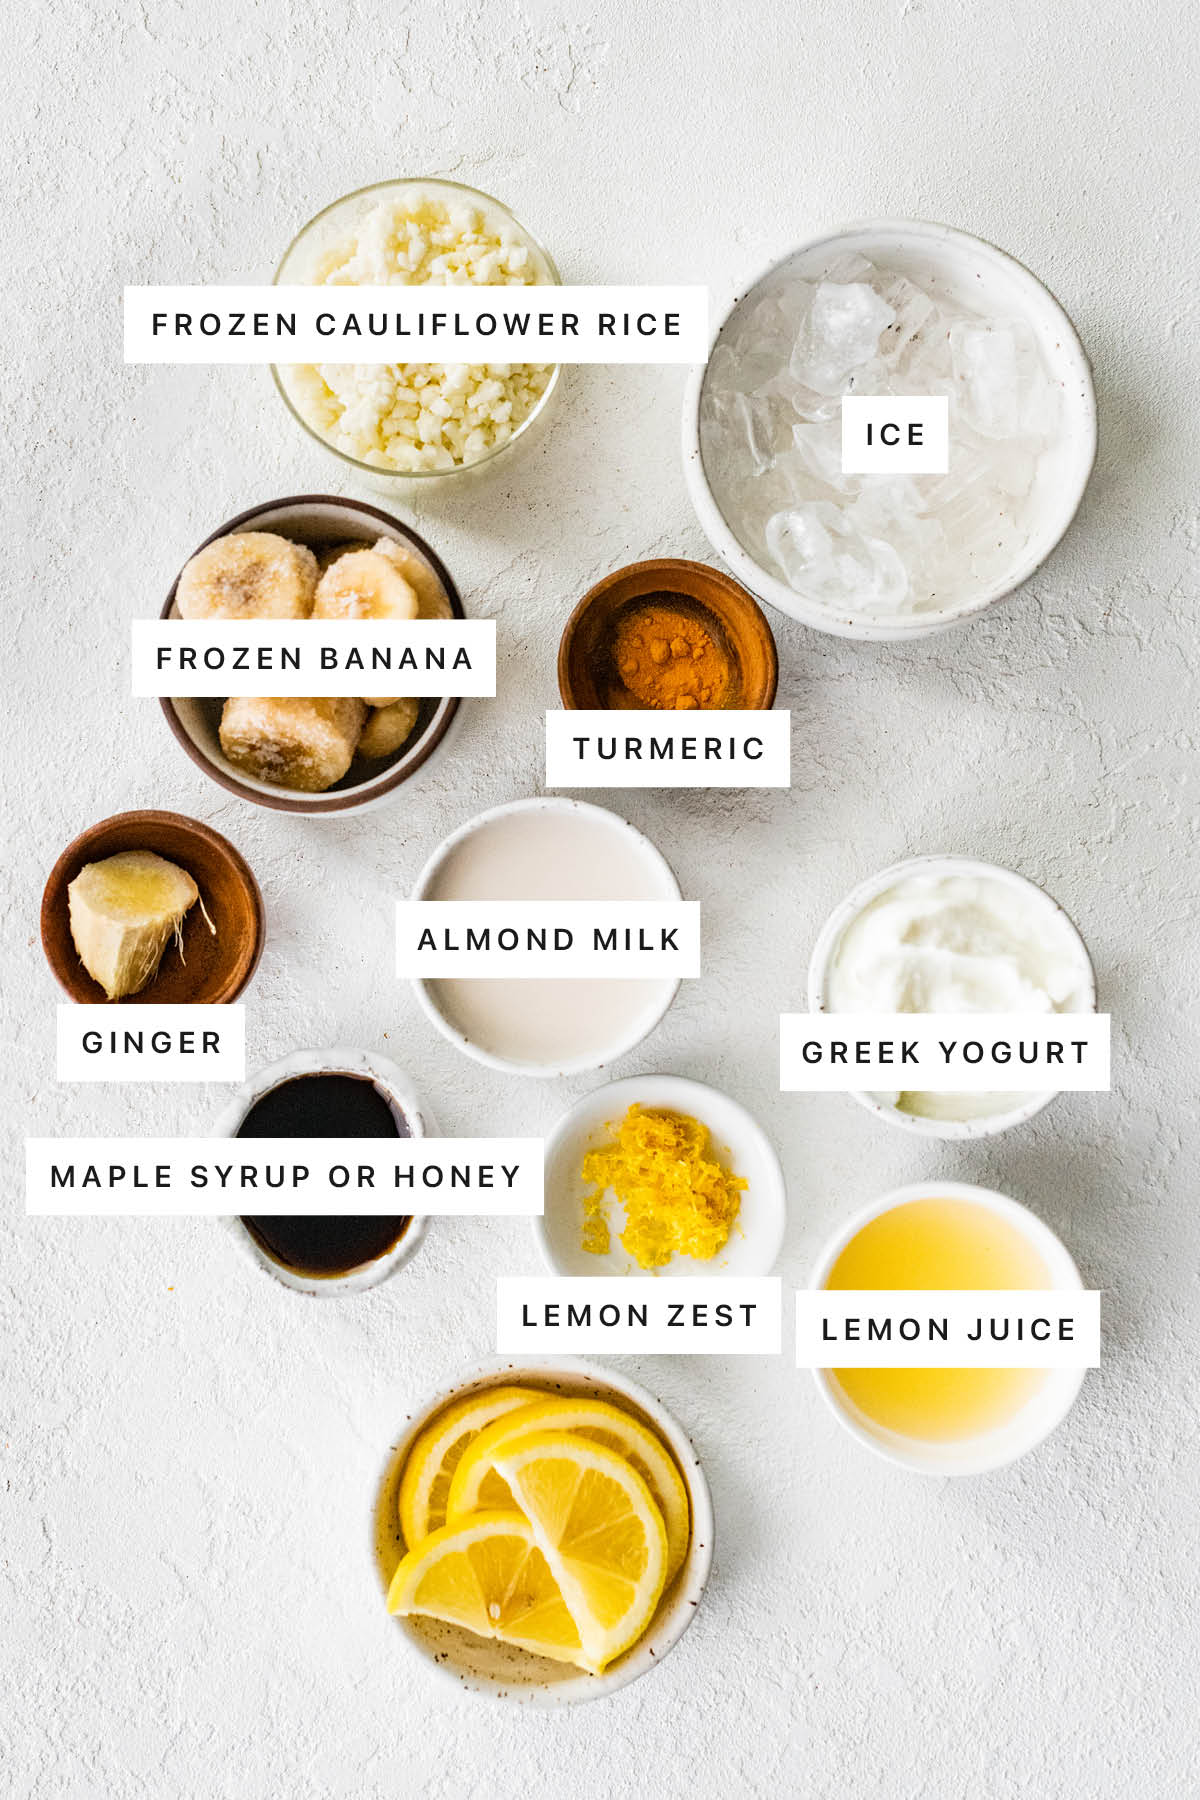 Measured ingredients to make a lemon smoothie: frozen cauliflower rice, ice, frozen banana, turmeric, ginger, almond milk, Greek yogurt, maple syrup, lemon zest, and lemon juice.